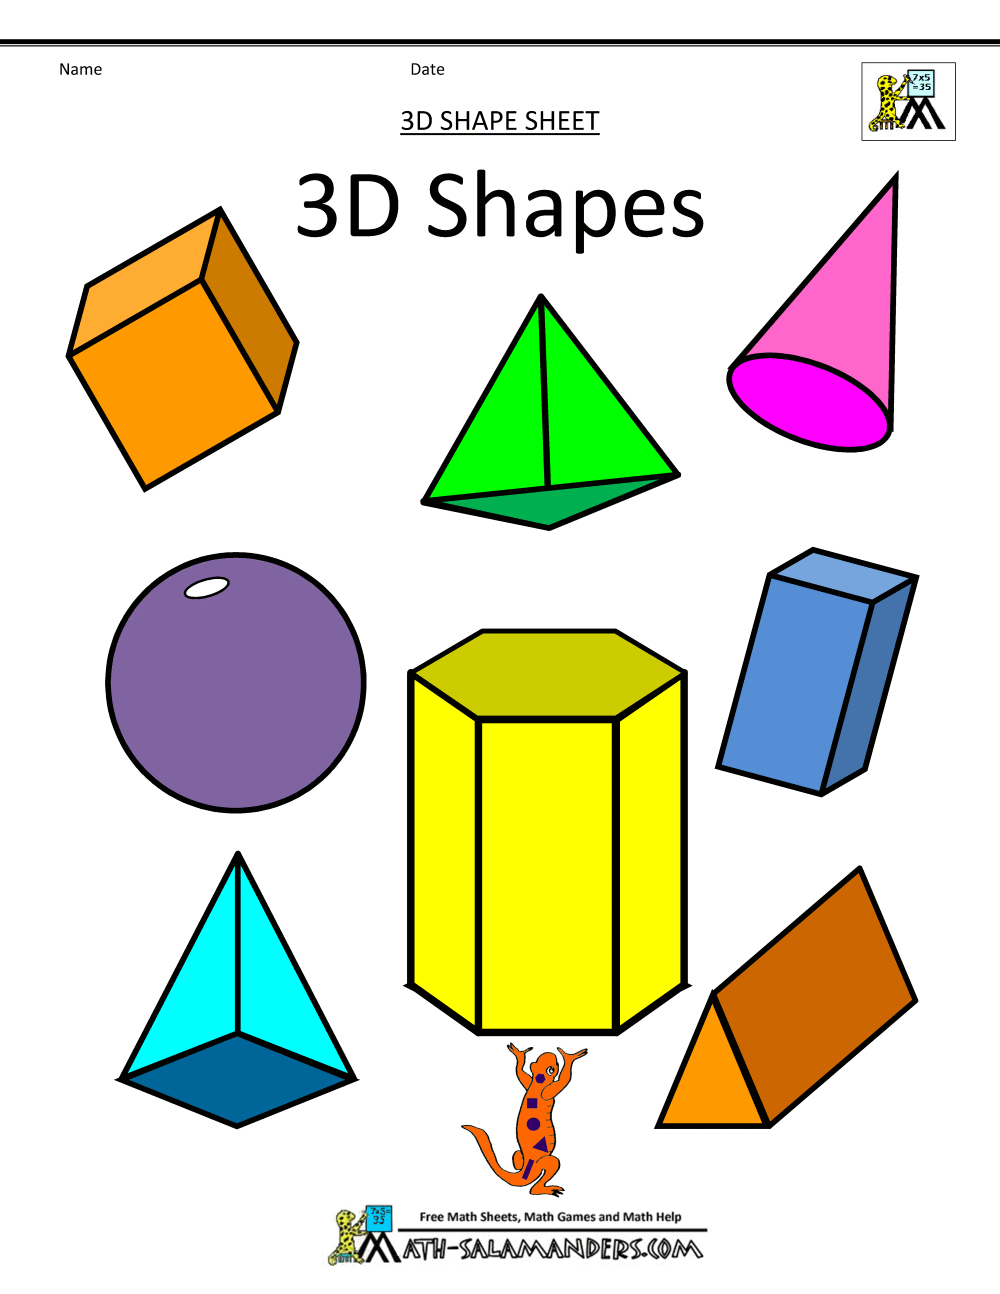 3D shapes.gif